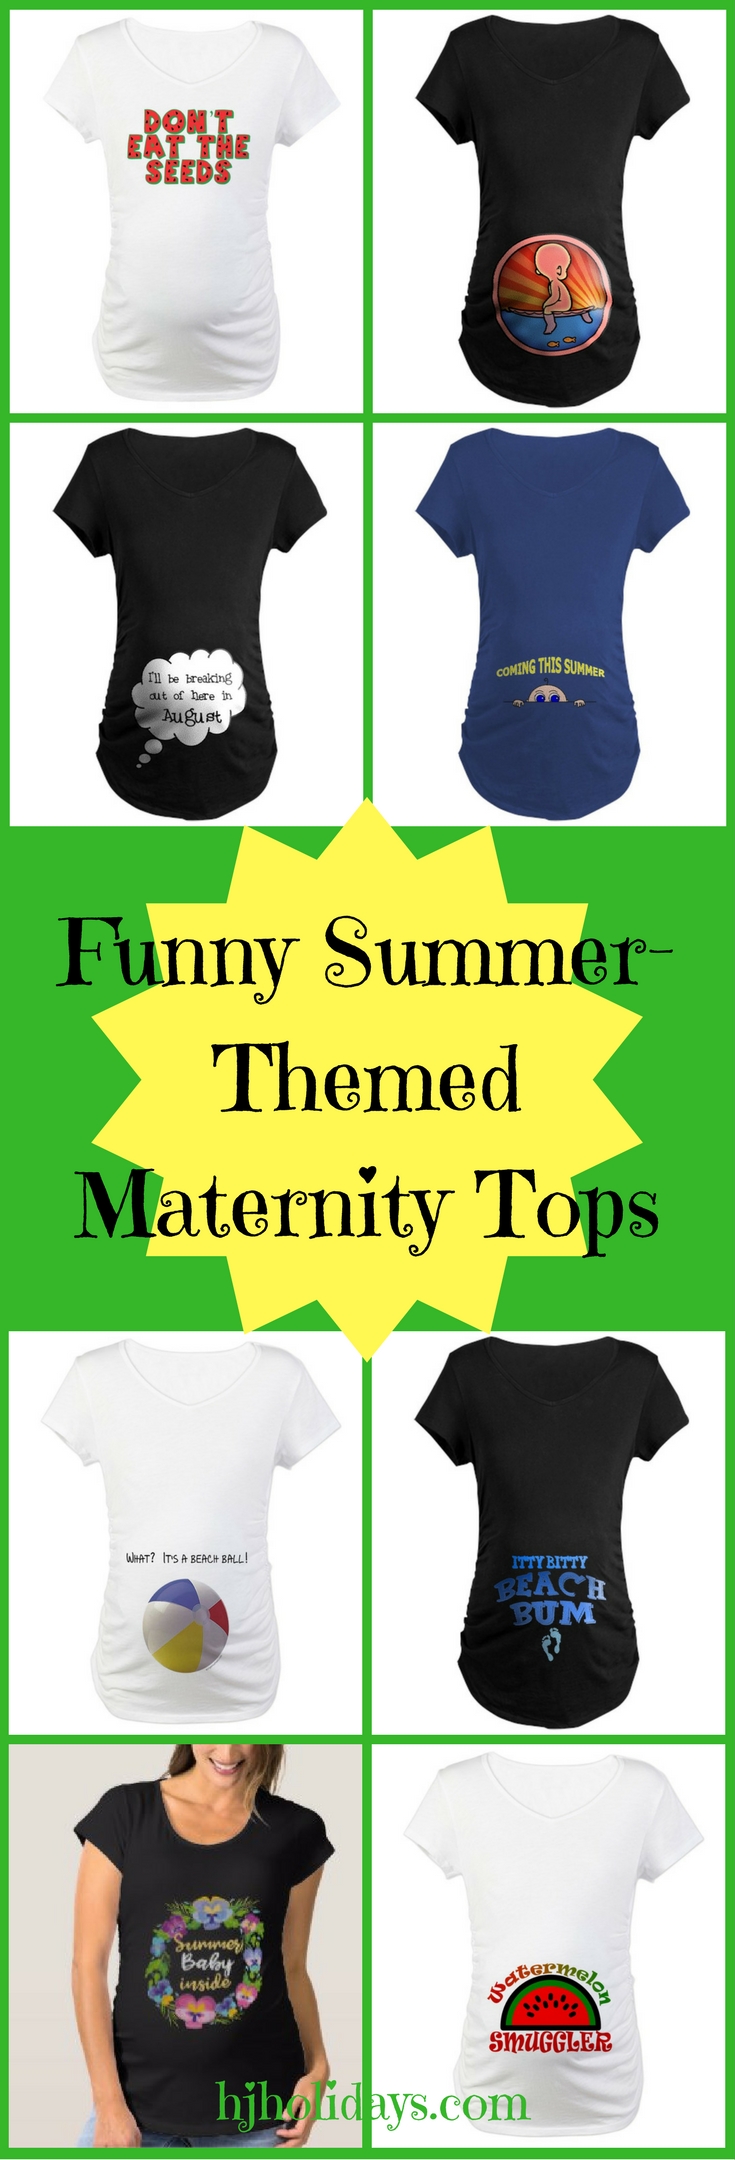 Funny Summer-Themed Maternity Tops